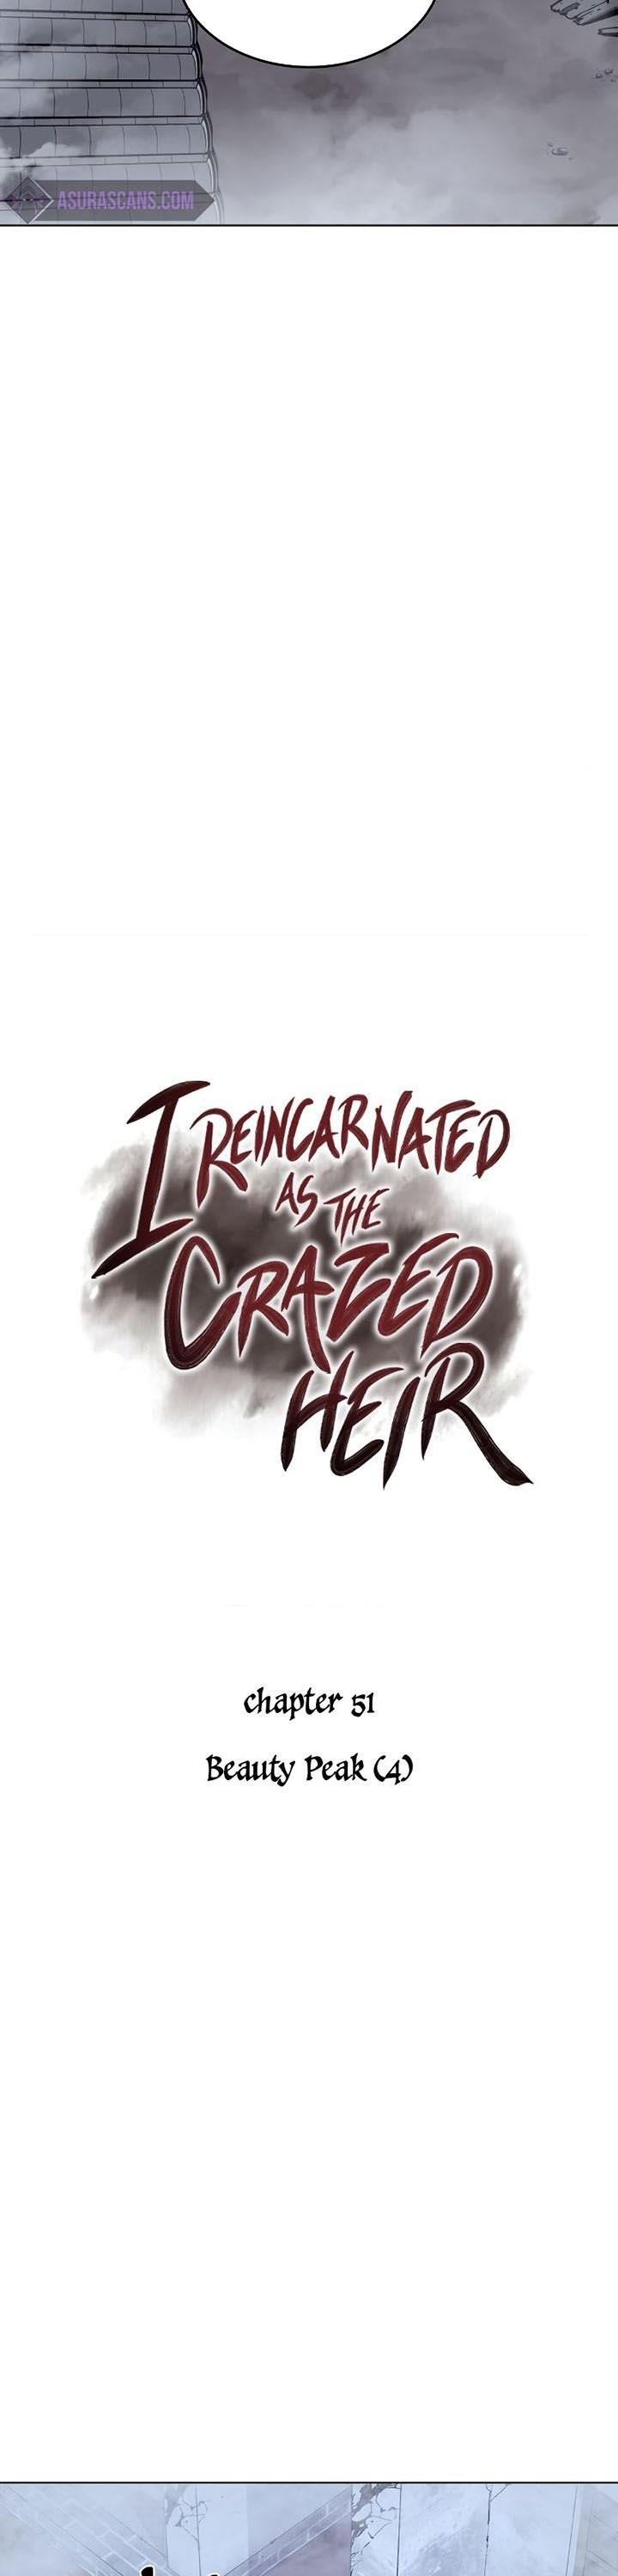 I Reincarnated As The Crazed Heir Chapter 51